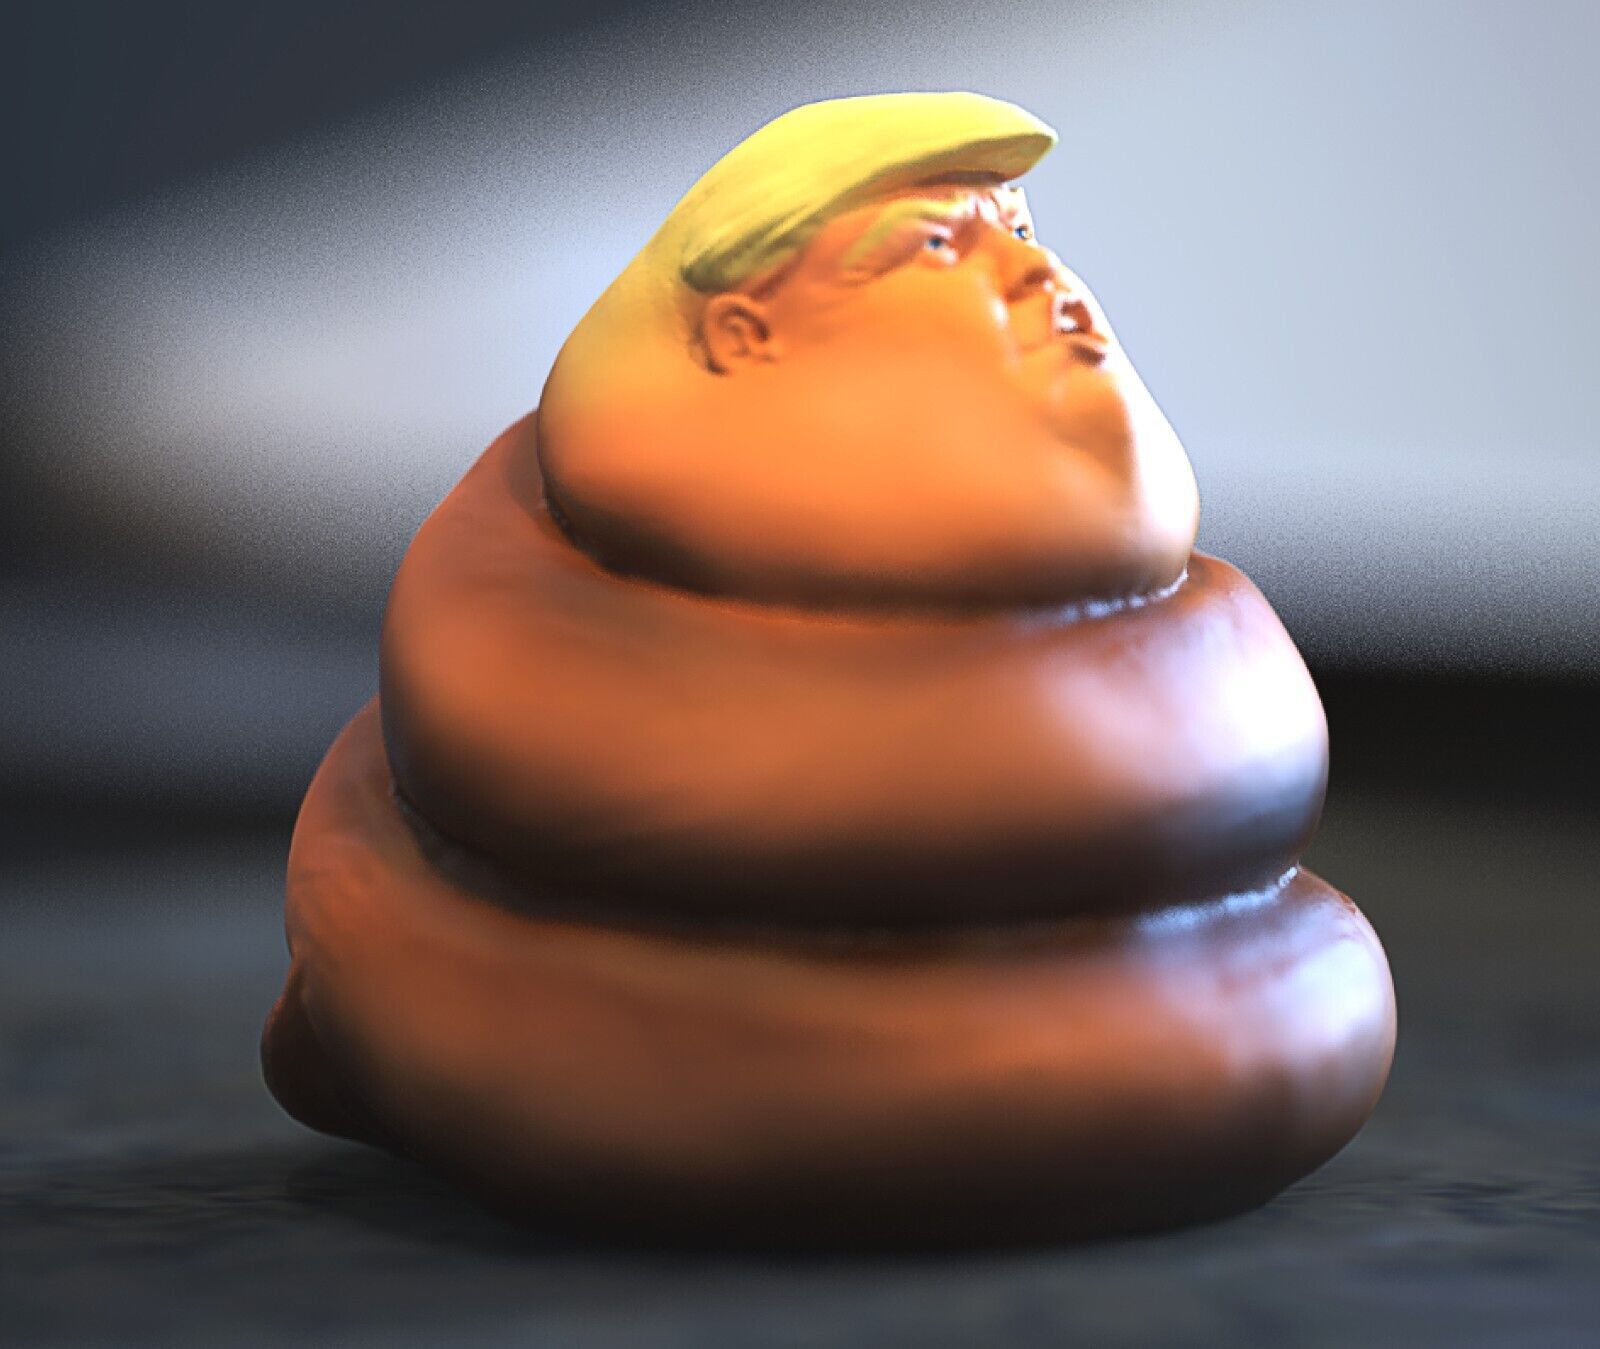 Donald Trump Poop Squishy (aka Trump Turd)